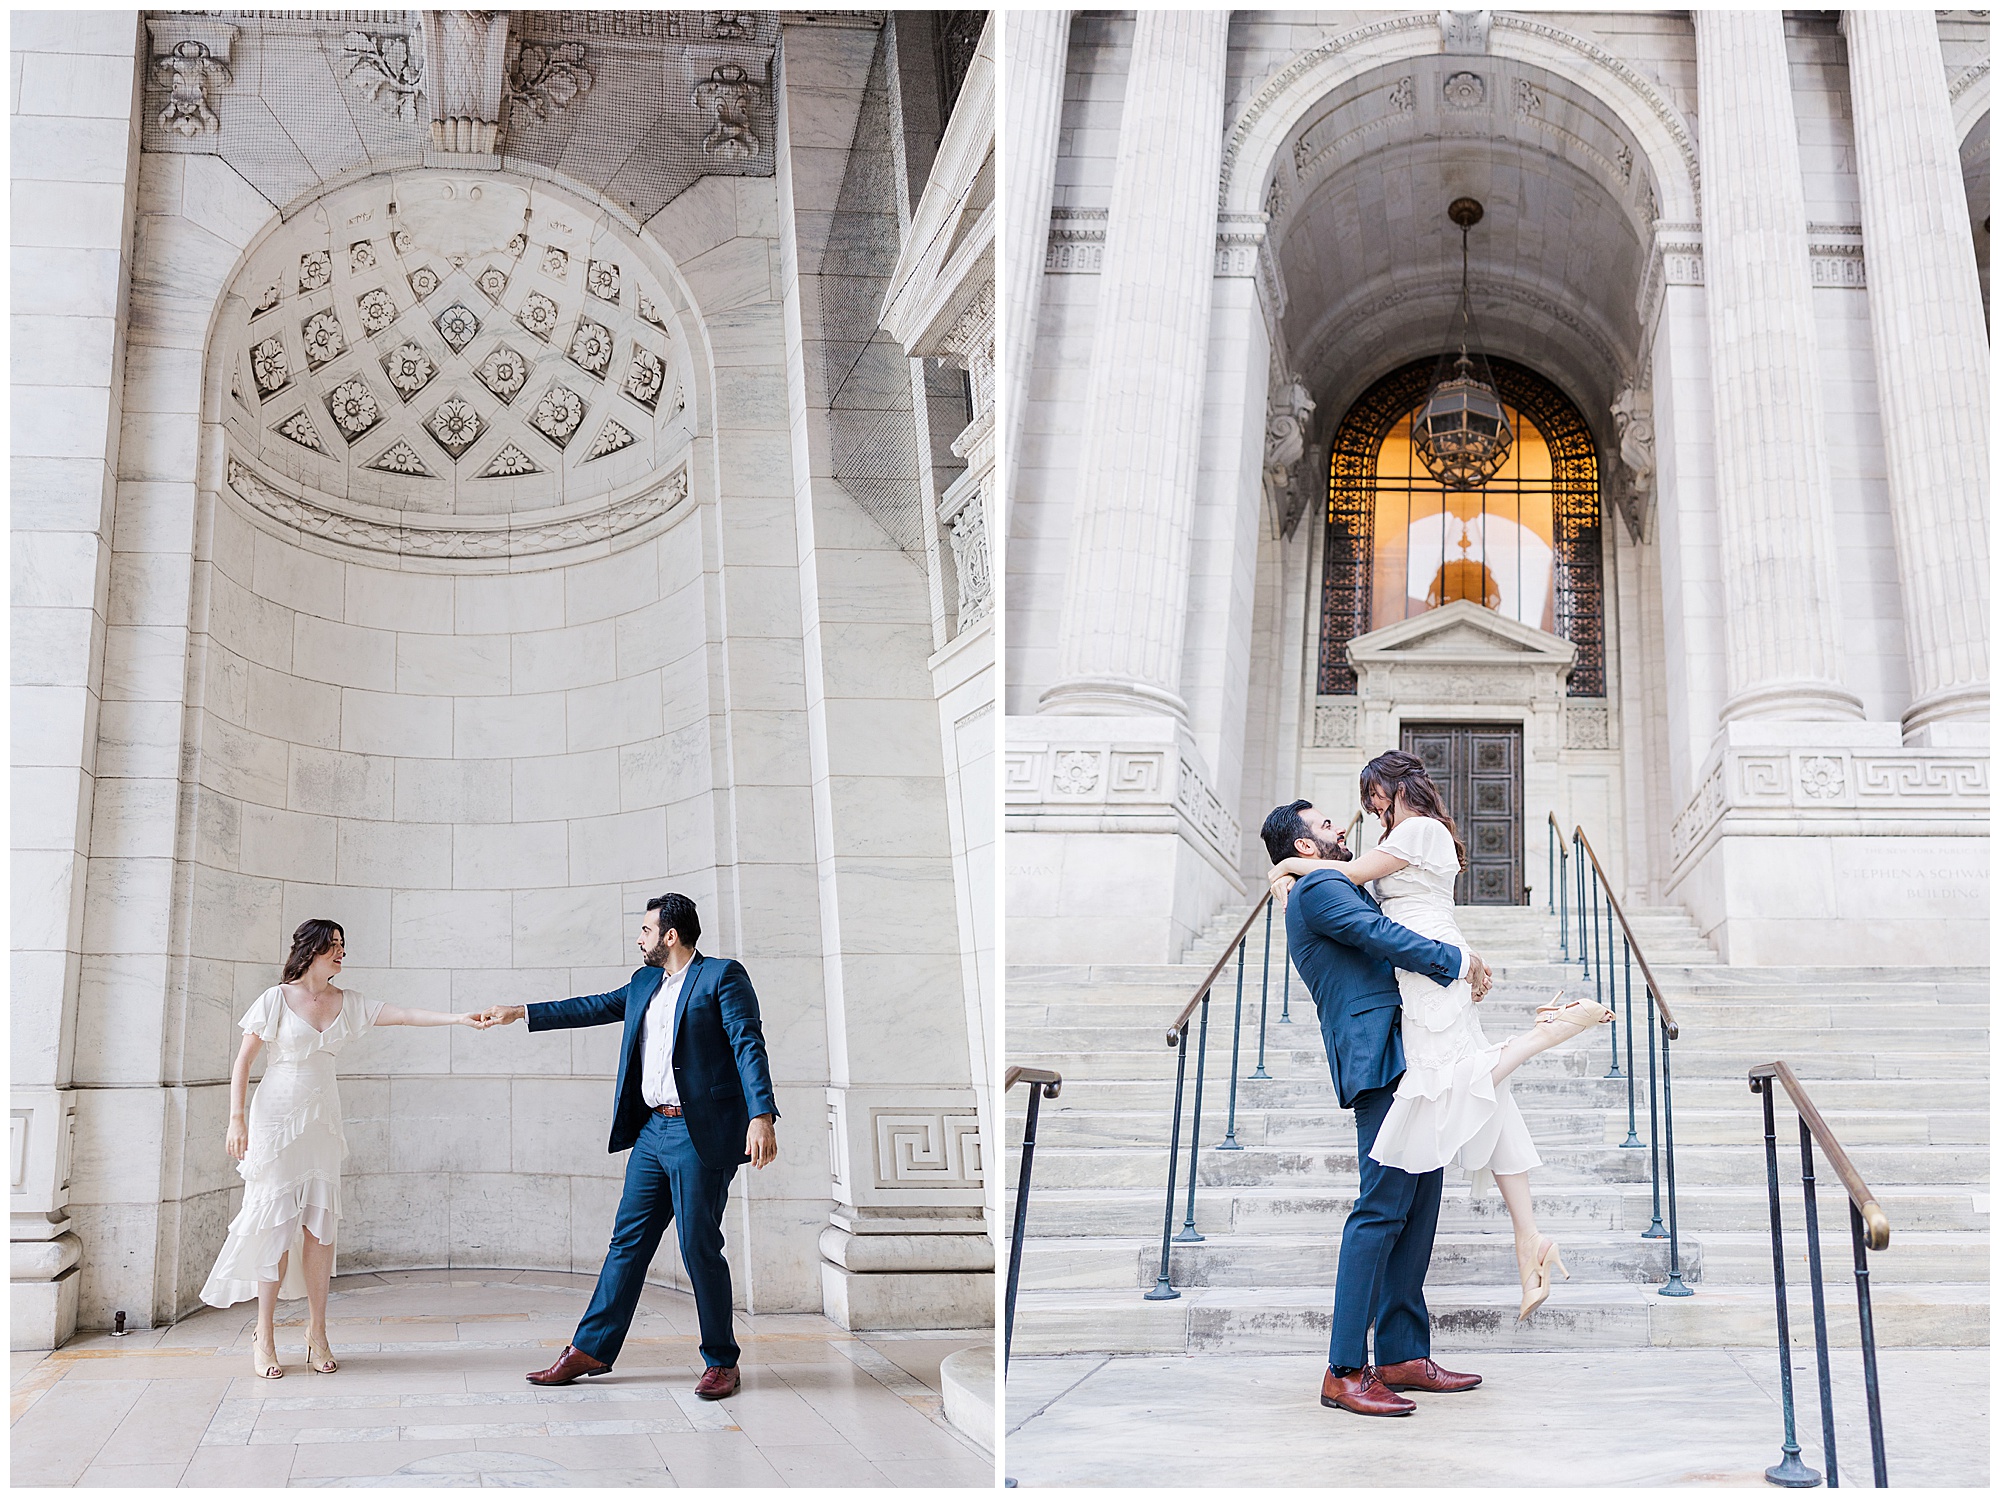 Amazing New York wedding photographers